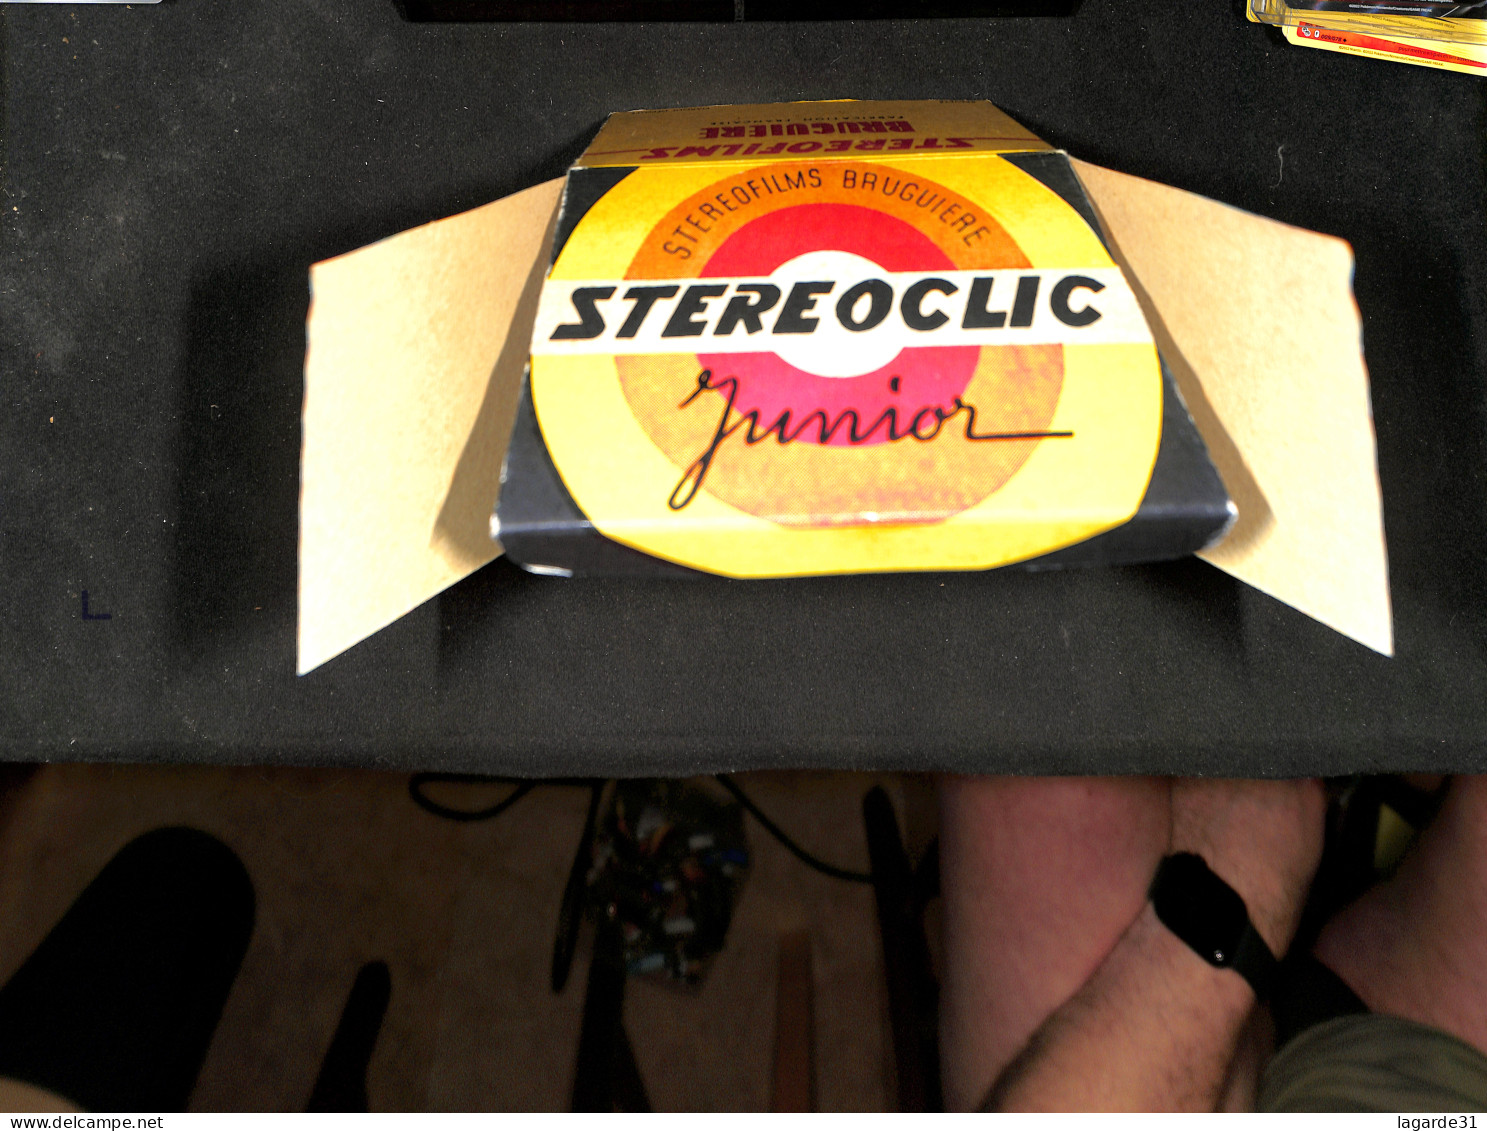 Stereoscope "stereoclic" Et Stereocartes Brugiere - Visionneuses Stéréoscopiques